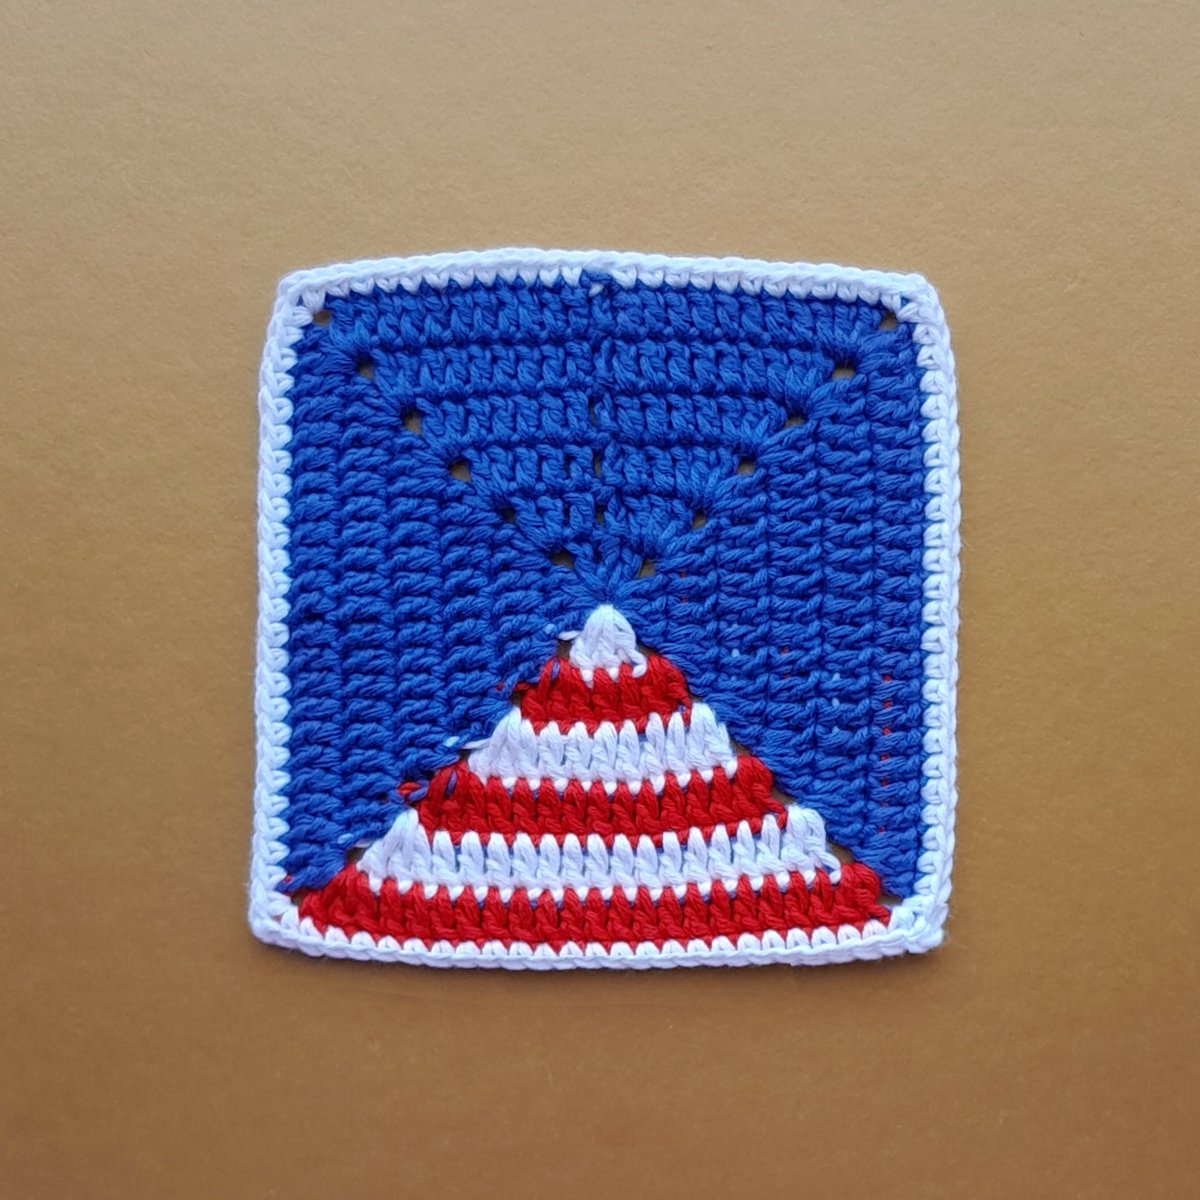 Granny Square American Flag Pattern, Patriotic Granny Square Pattern
ravelry.com/patterns/libra…

#Ravelry #crochet #GrannySquarePattern #crochetpattern #grannysquare #crocheter #crocheting #crochetideas #handmade #craft #idea #giftidea #gift #gifts